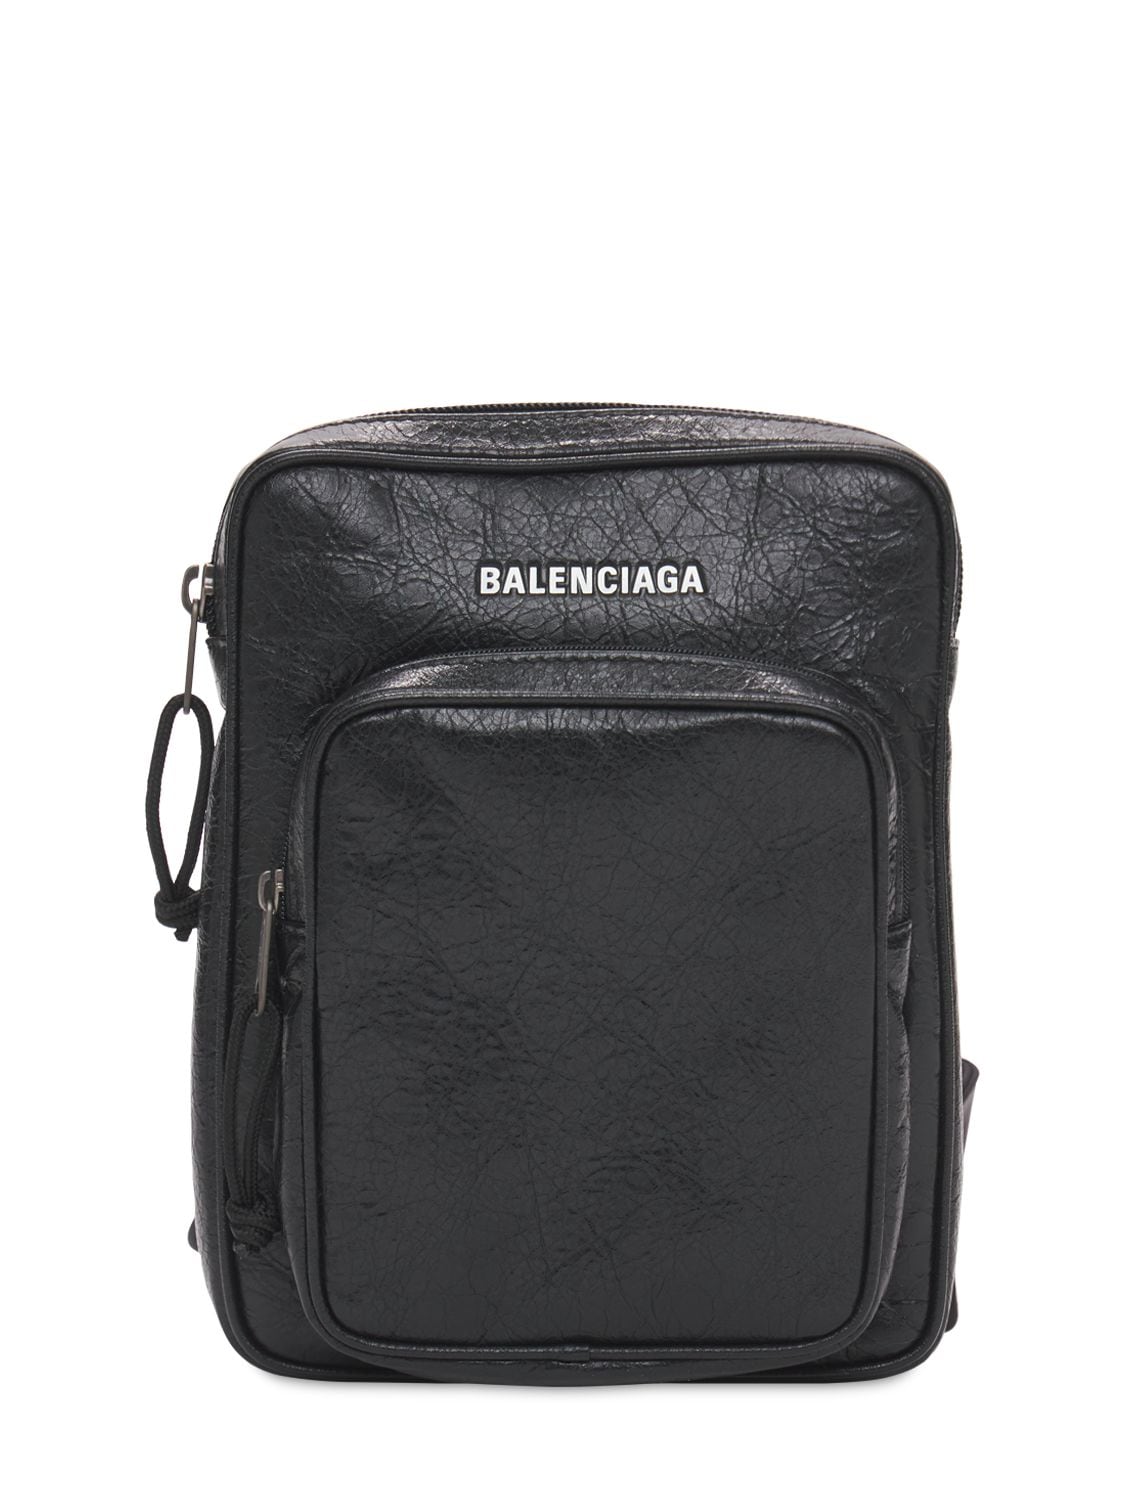 Balenciaga Logo Leather Crossbody Bag In Black